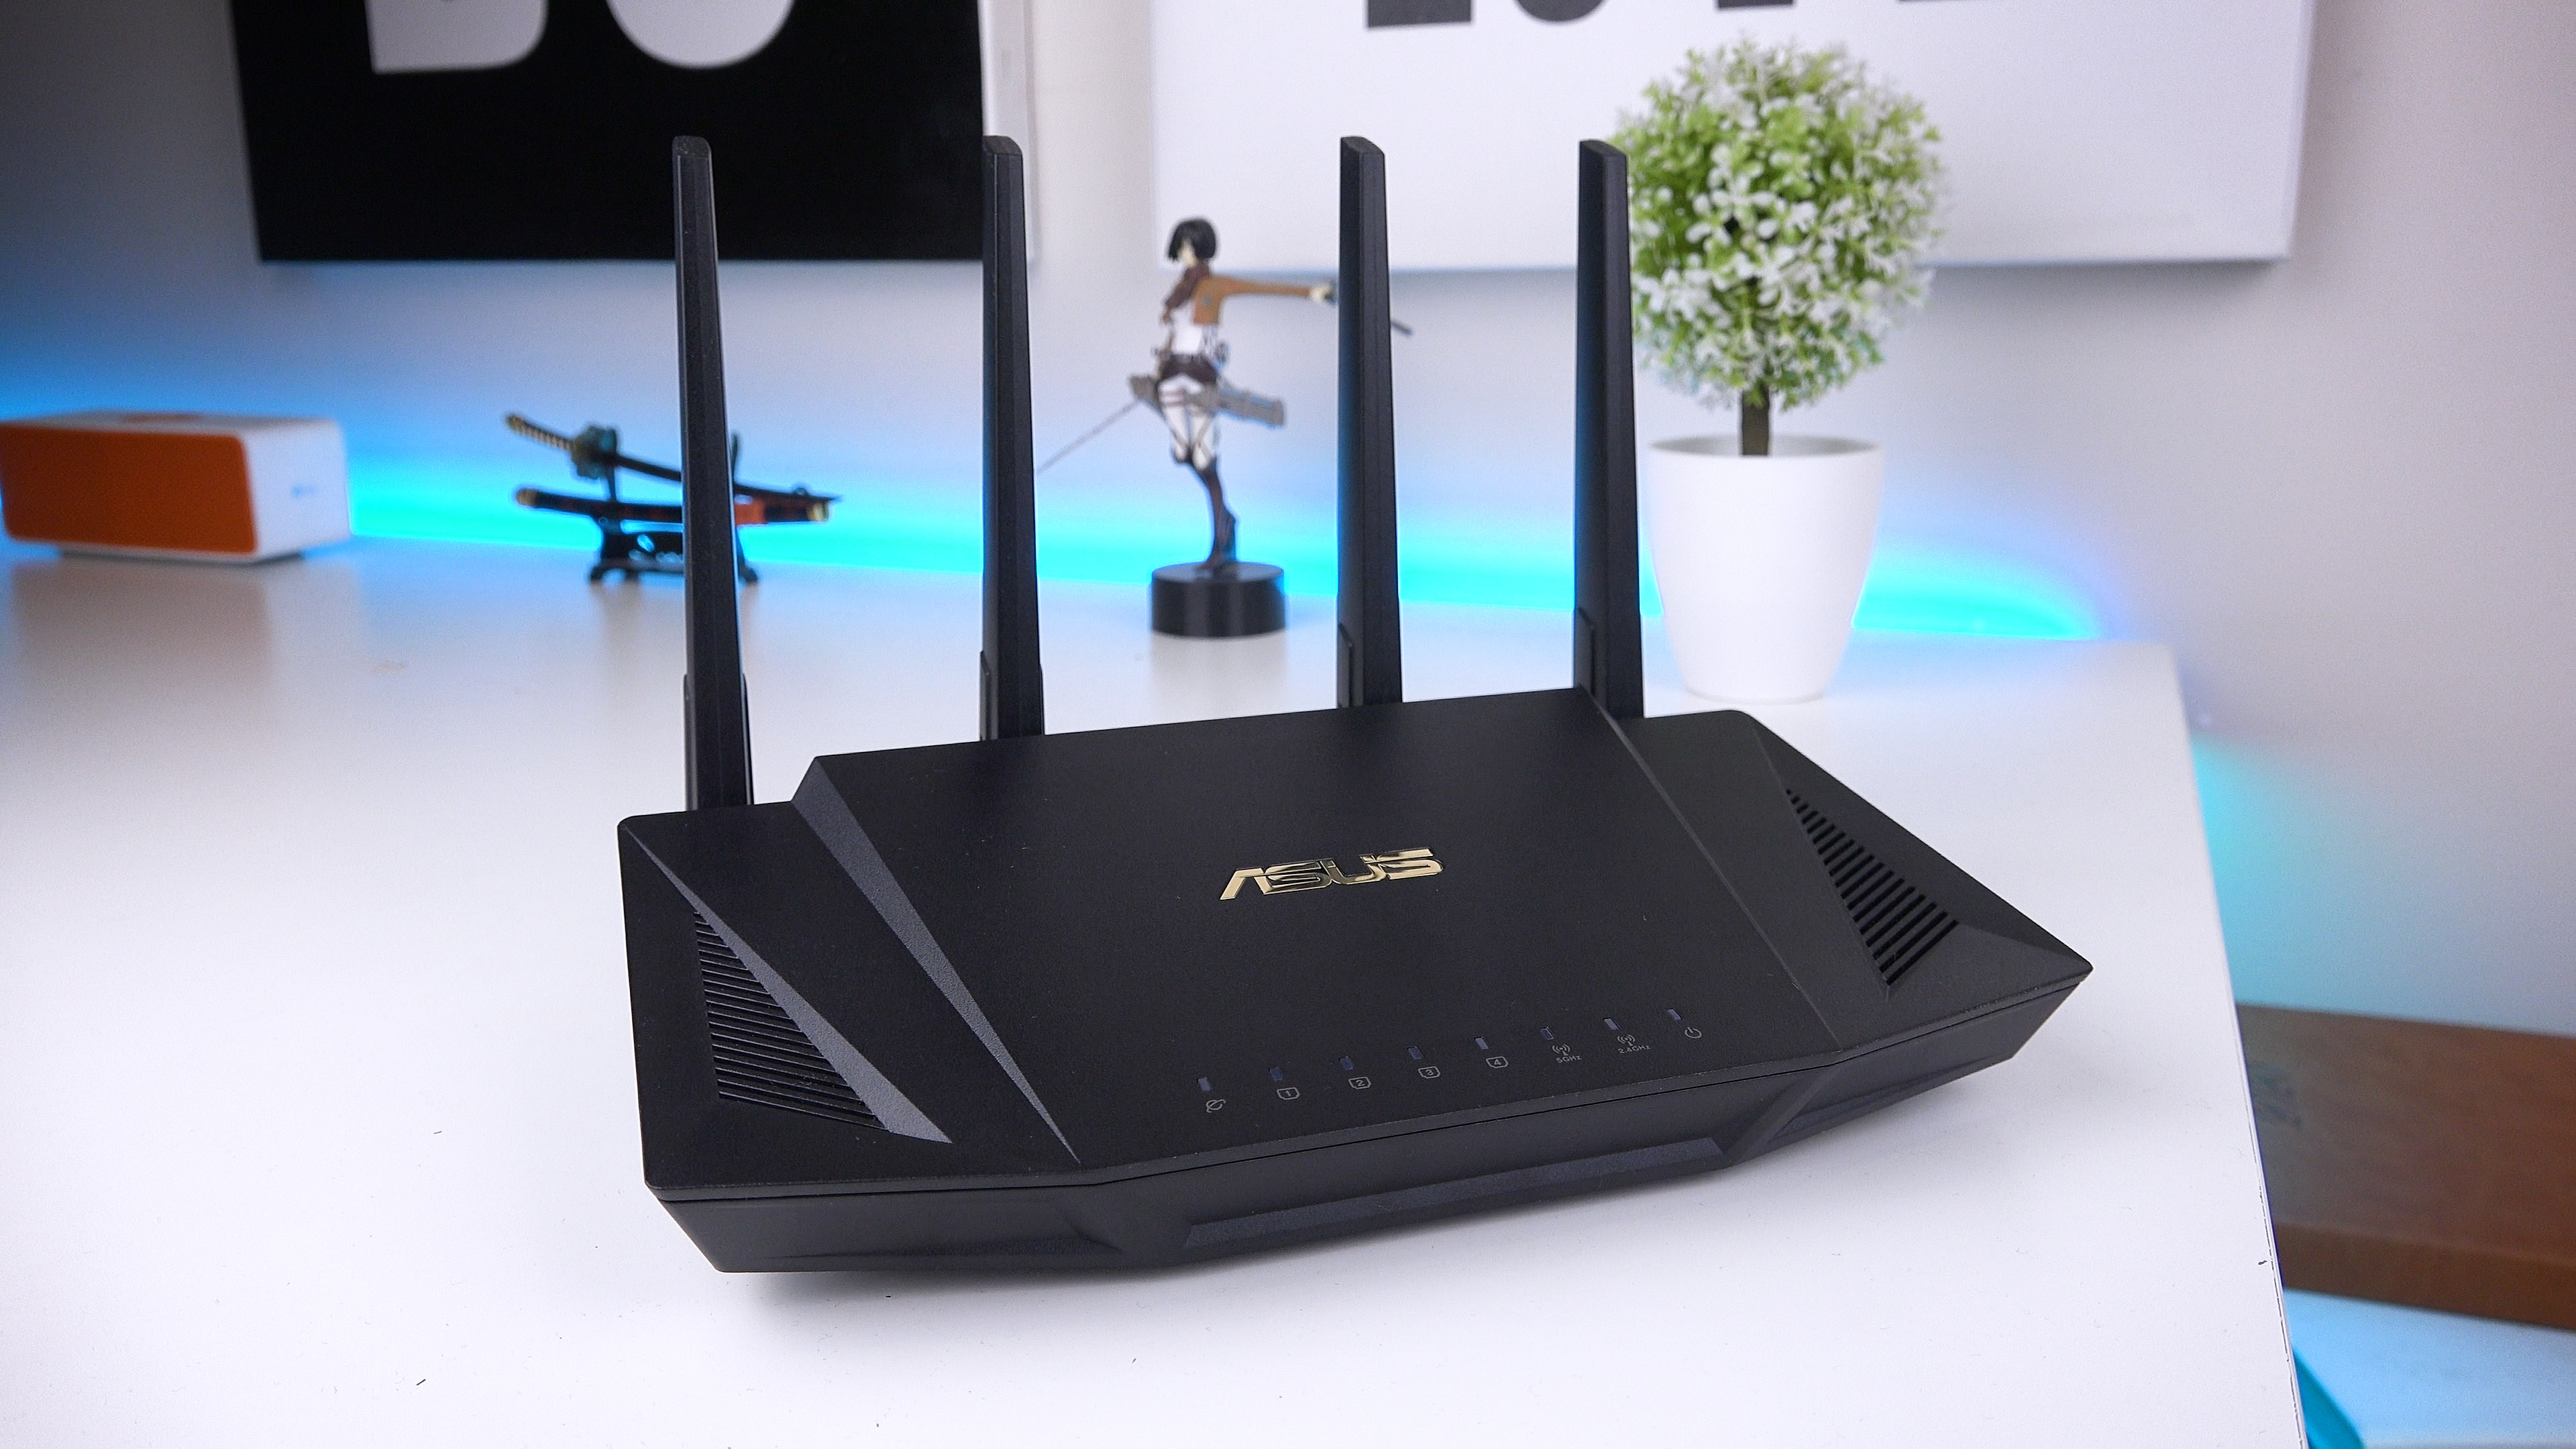 Asus RT-AX58U router ve PCE-AX58BT Wi-Fi adaptör incelemesi